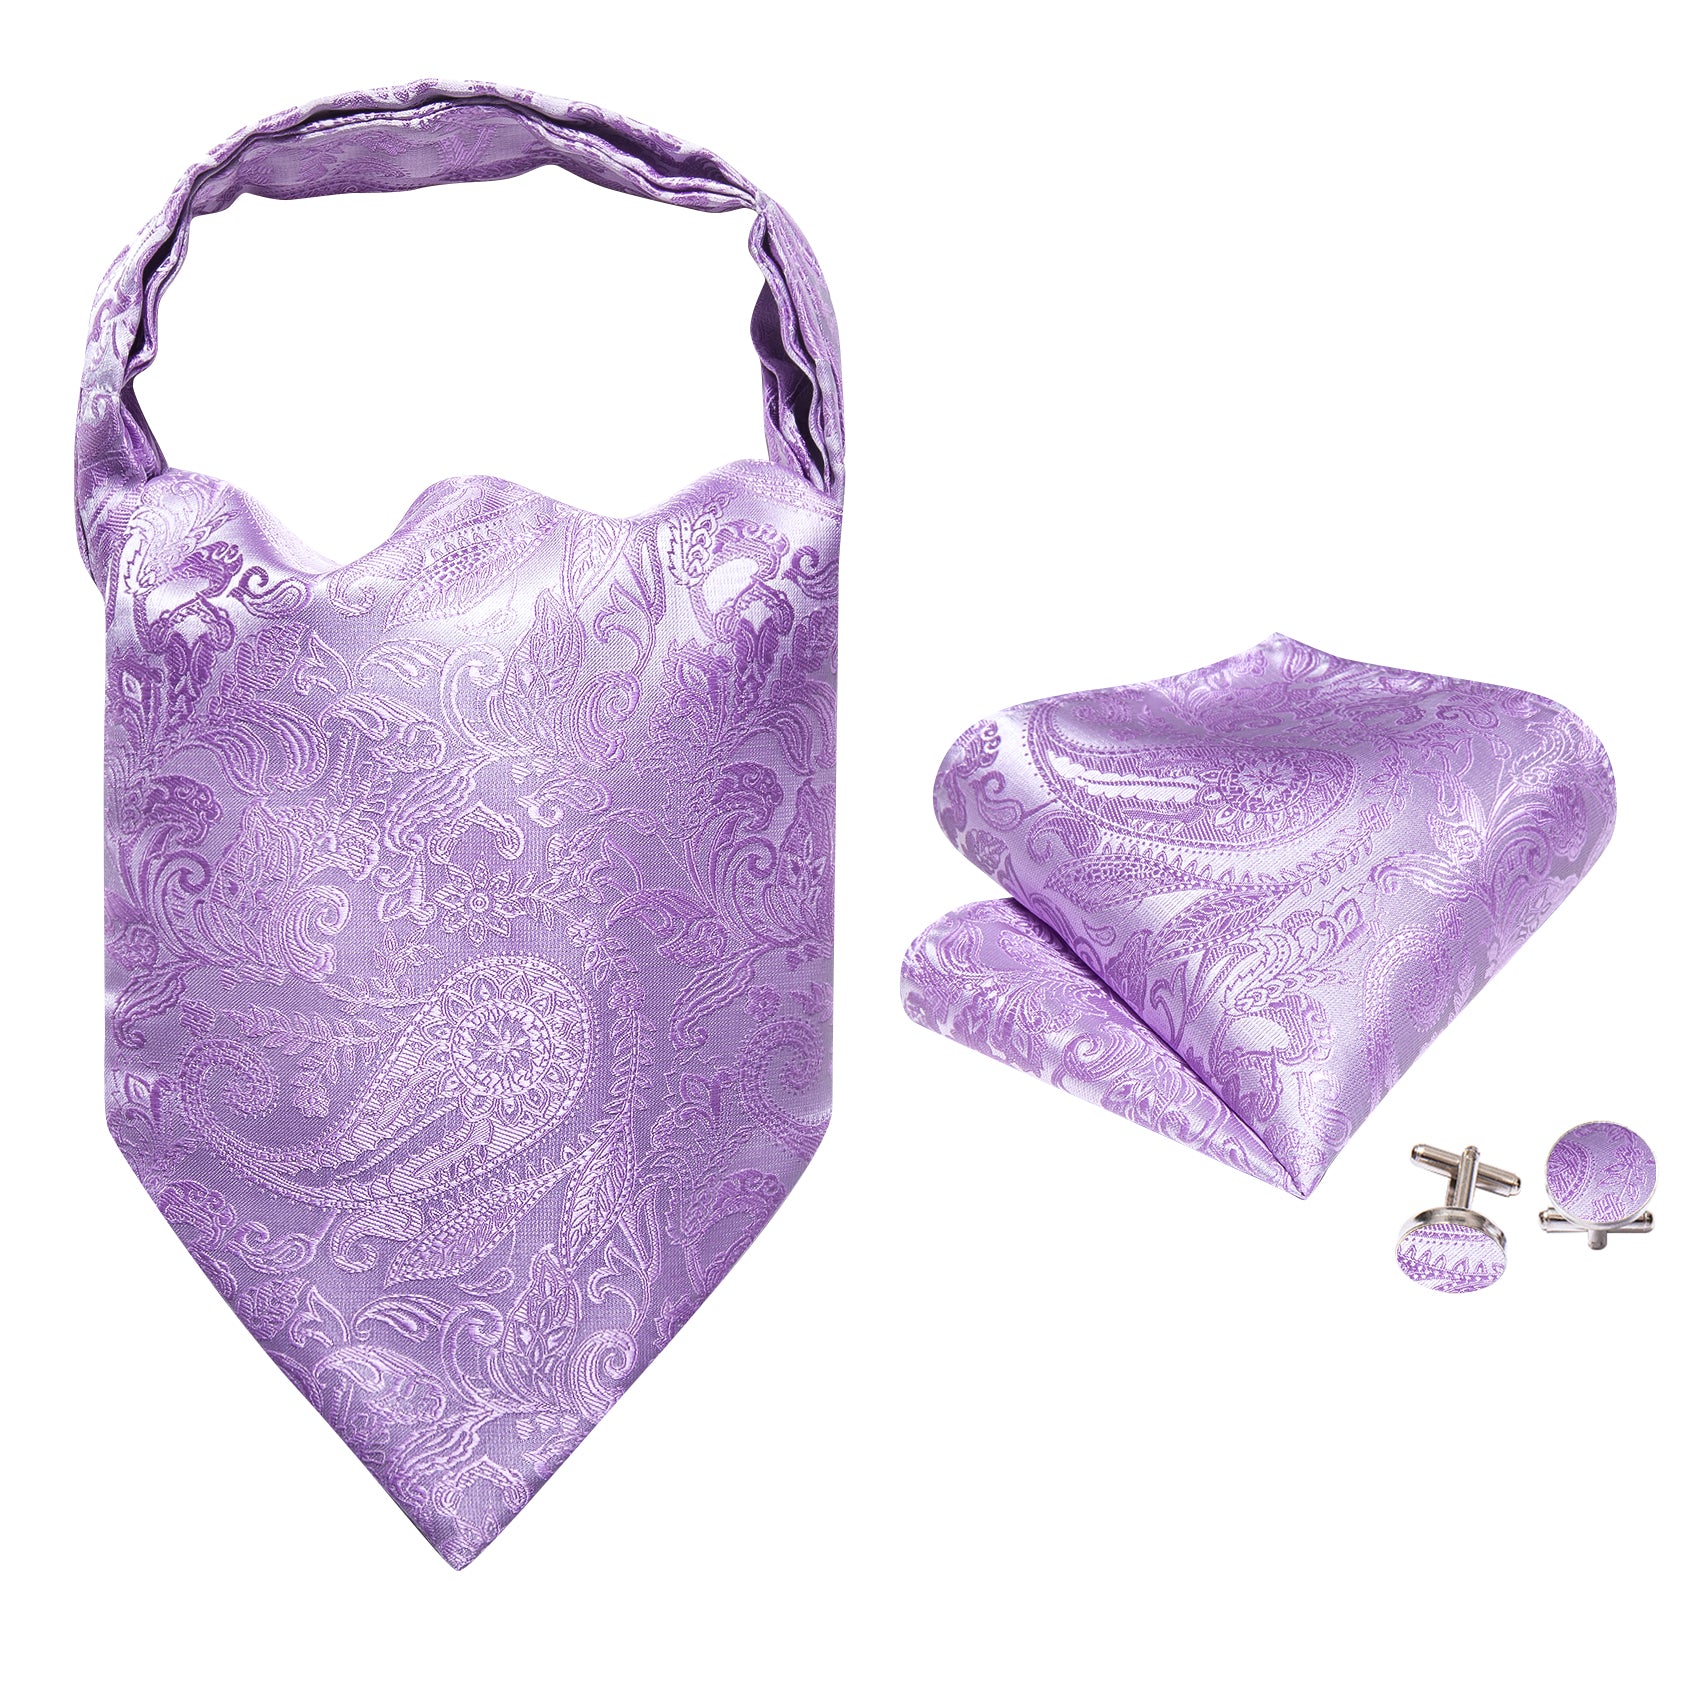 Purple Paisley Silk Ascot Handkerchief Cufflinks